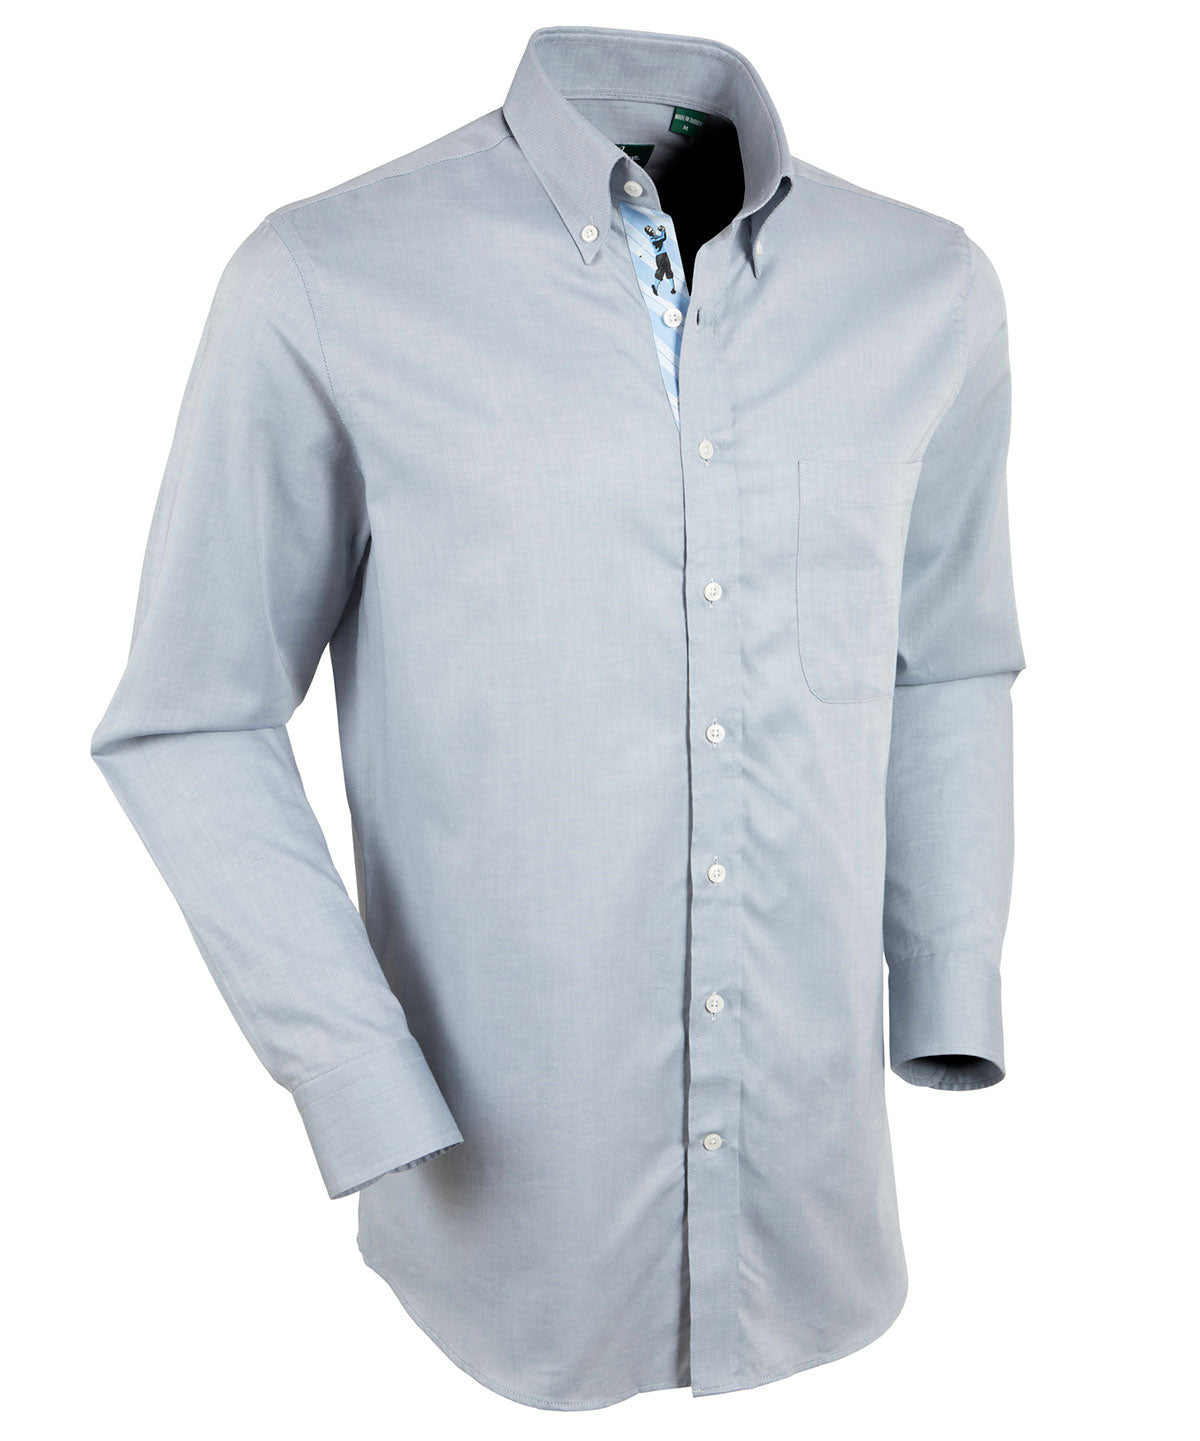 Signature 100% Cotton Oxford Solid Button-Down Shirt - Trim Fit